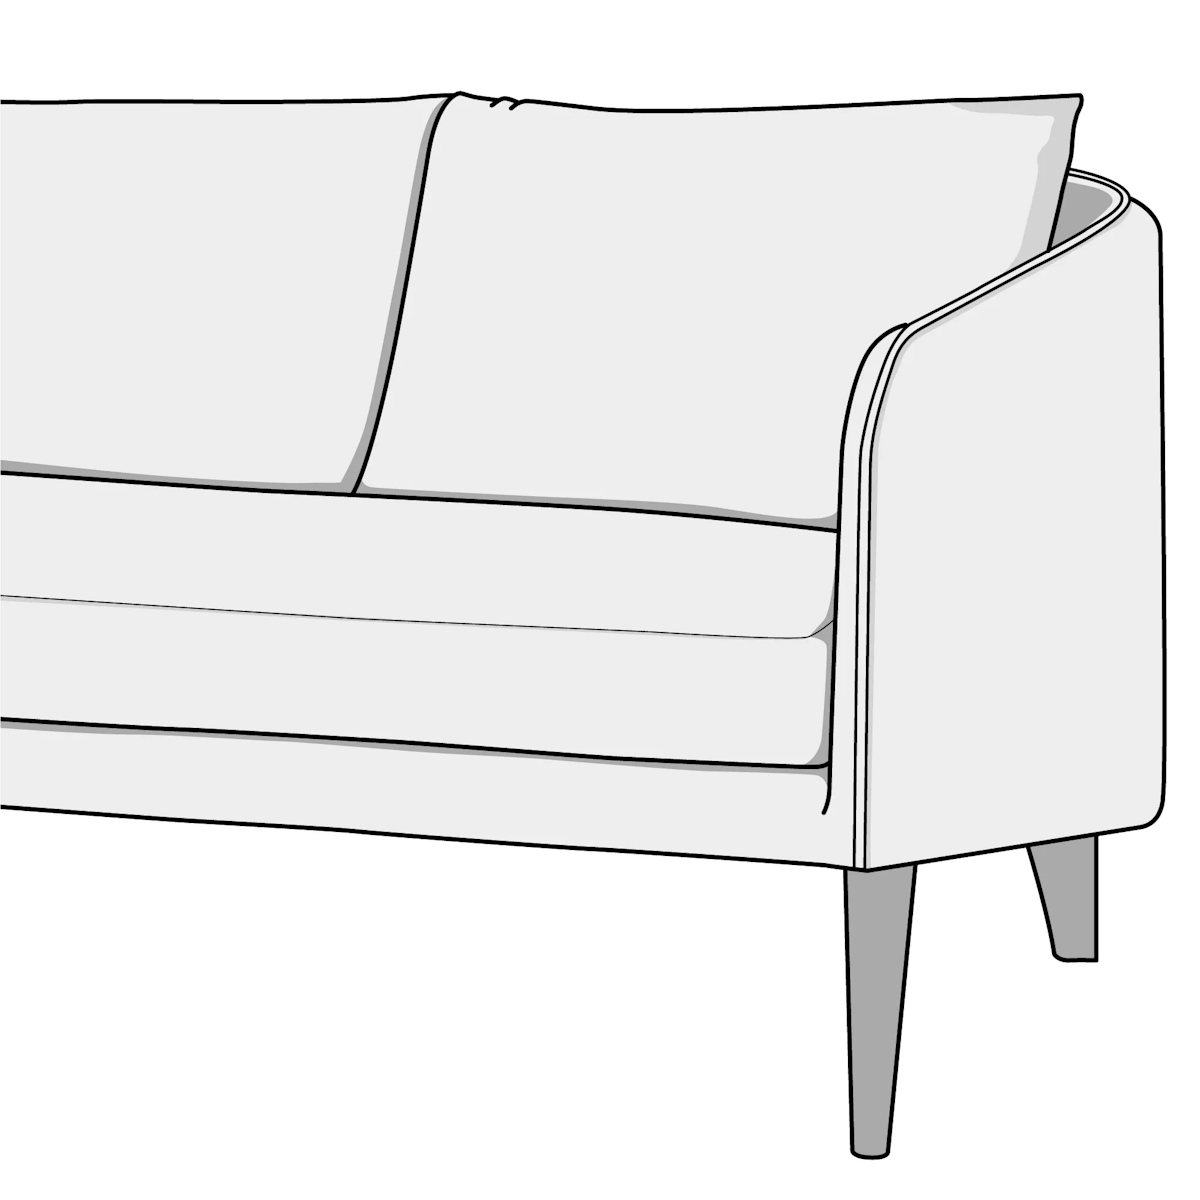 Illustration of bench seat sofa cushion style